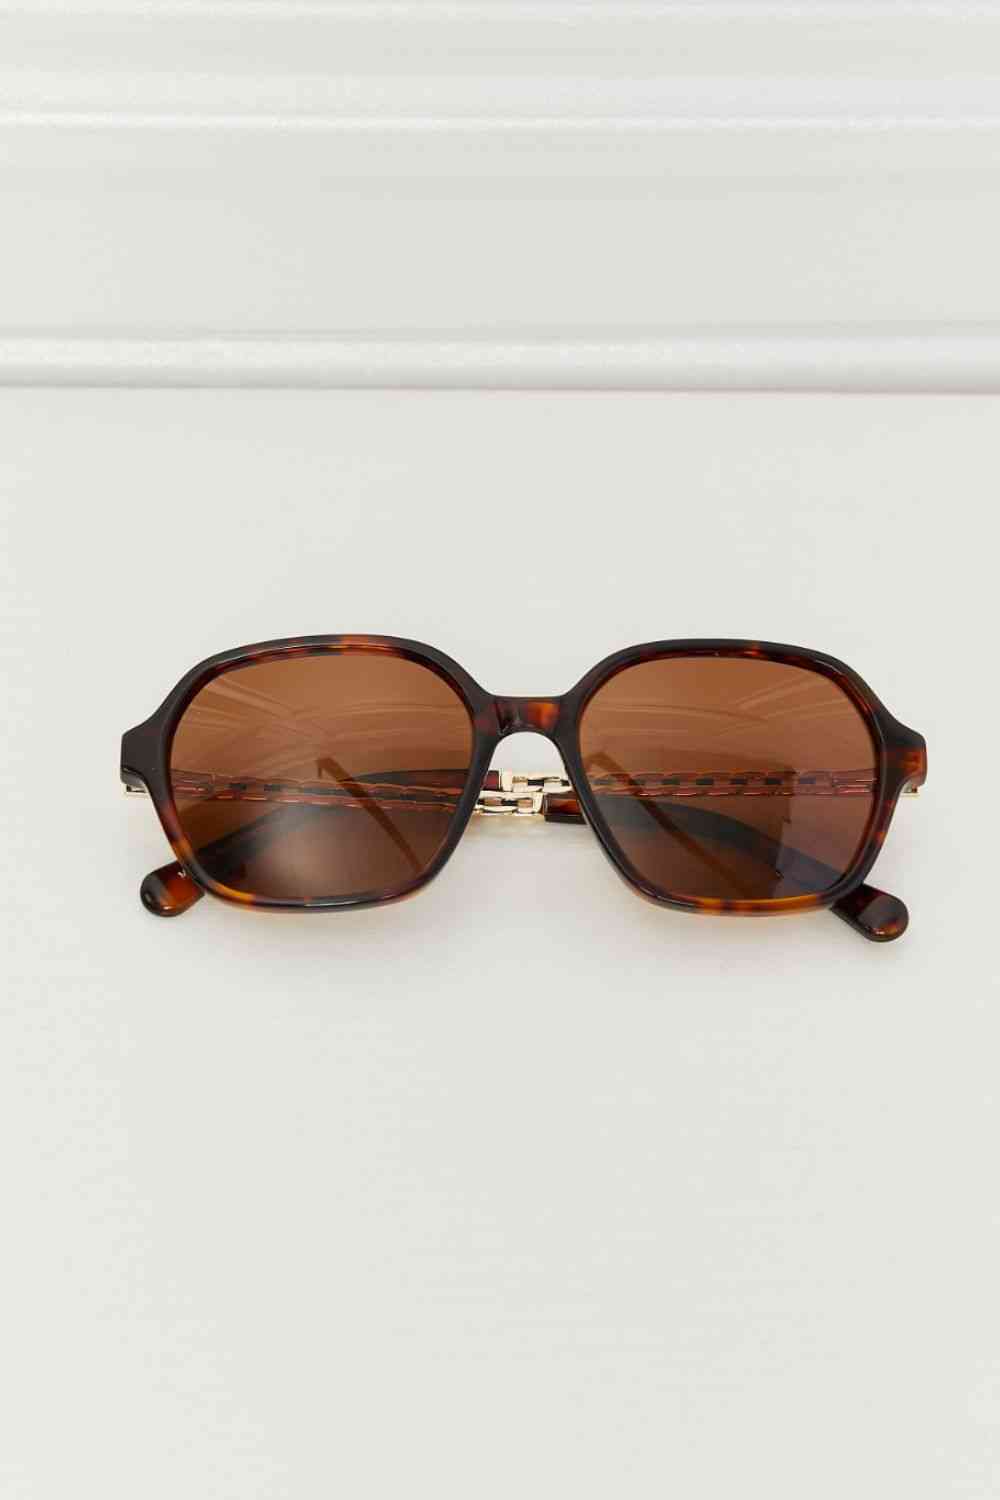 TAC Polarization Lens Full Rim Sunglasses - Victoria Royale Boutique, LLC.